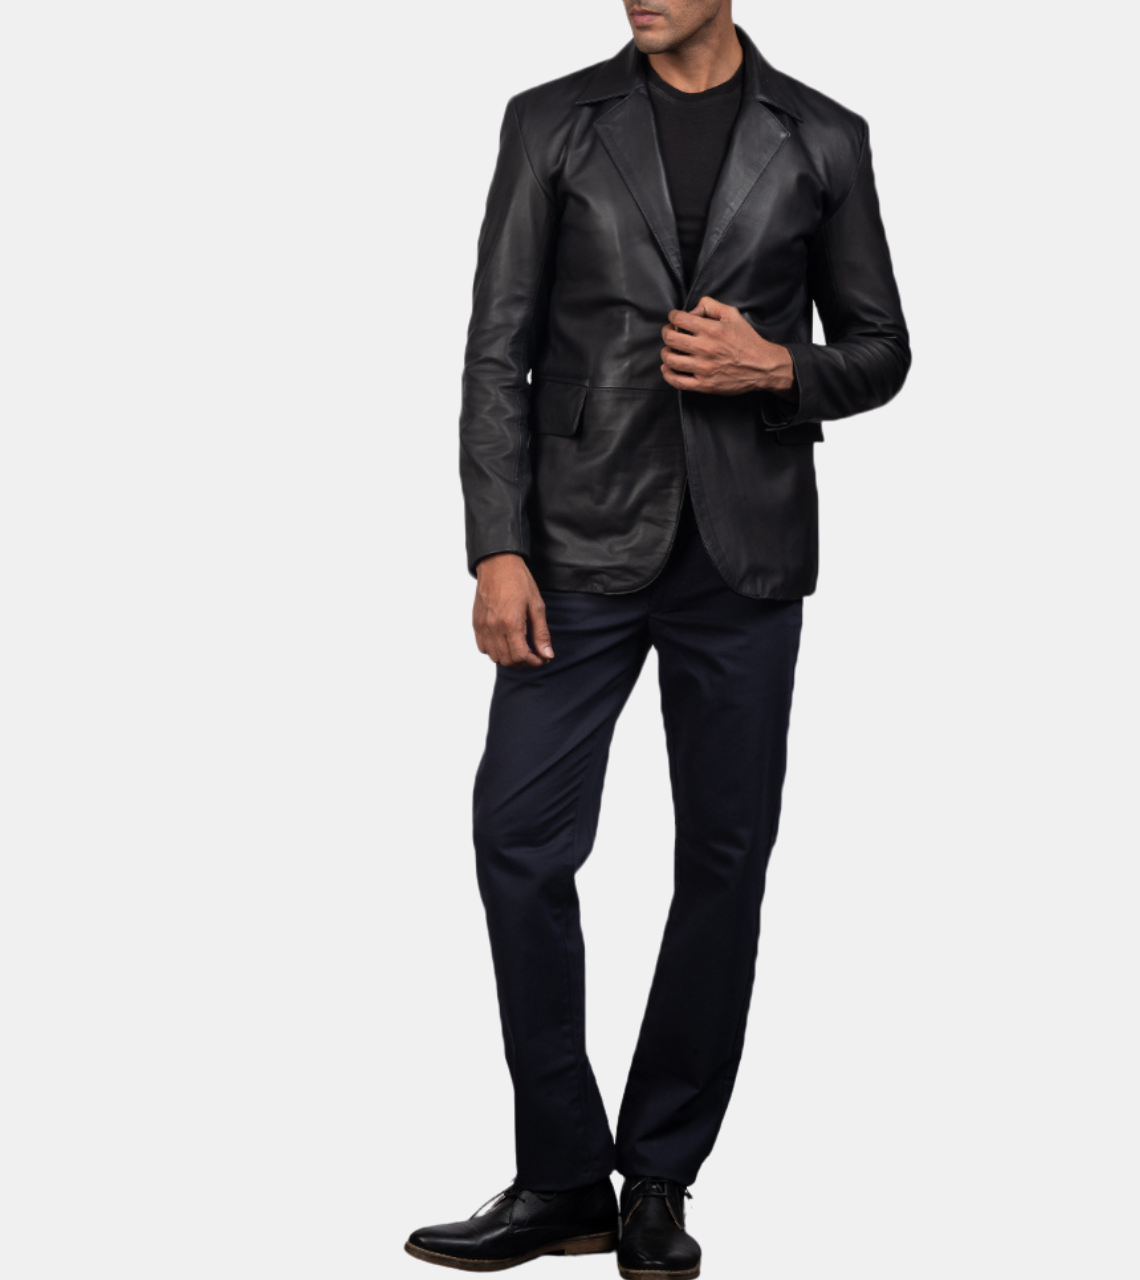 Bruni Black Leather Blazer For Men's